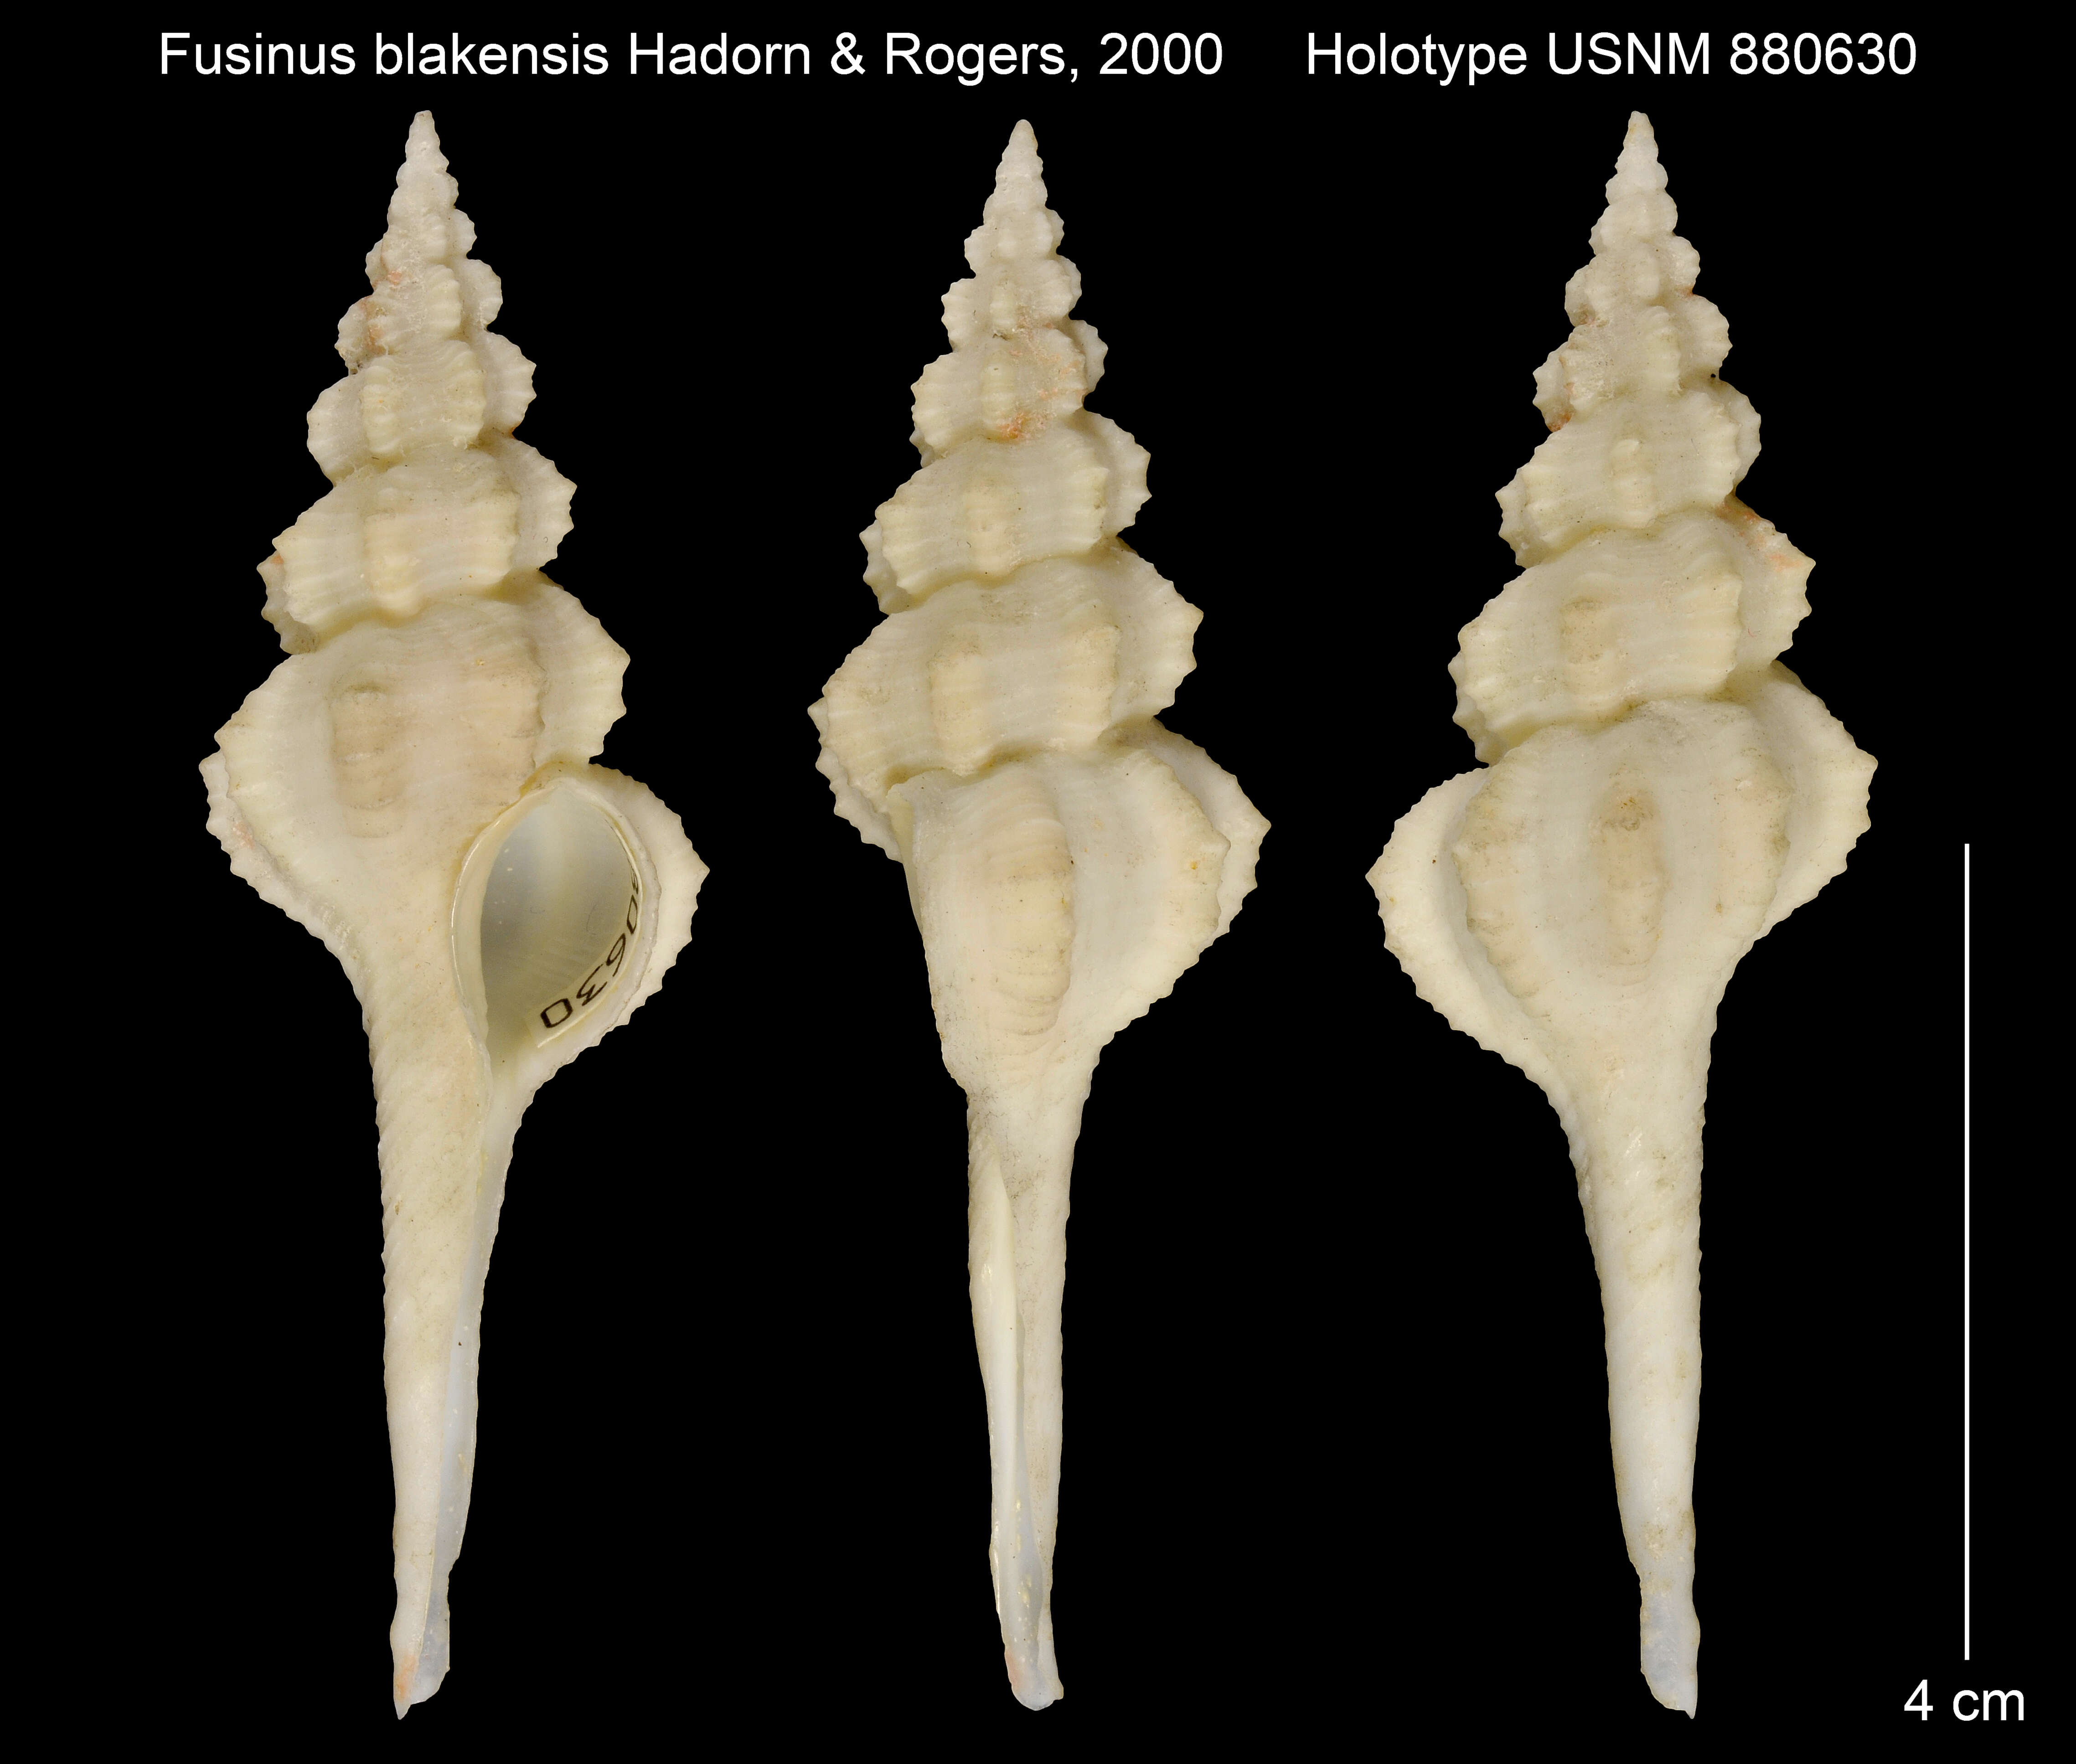 Image of Fusinus blakensis Hadorn & Rogers 2000